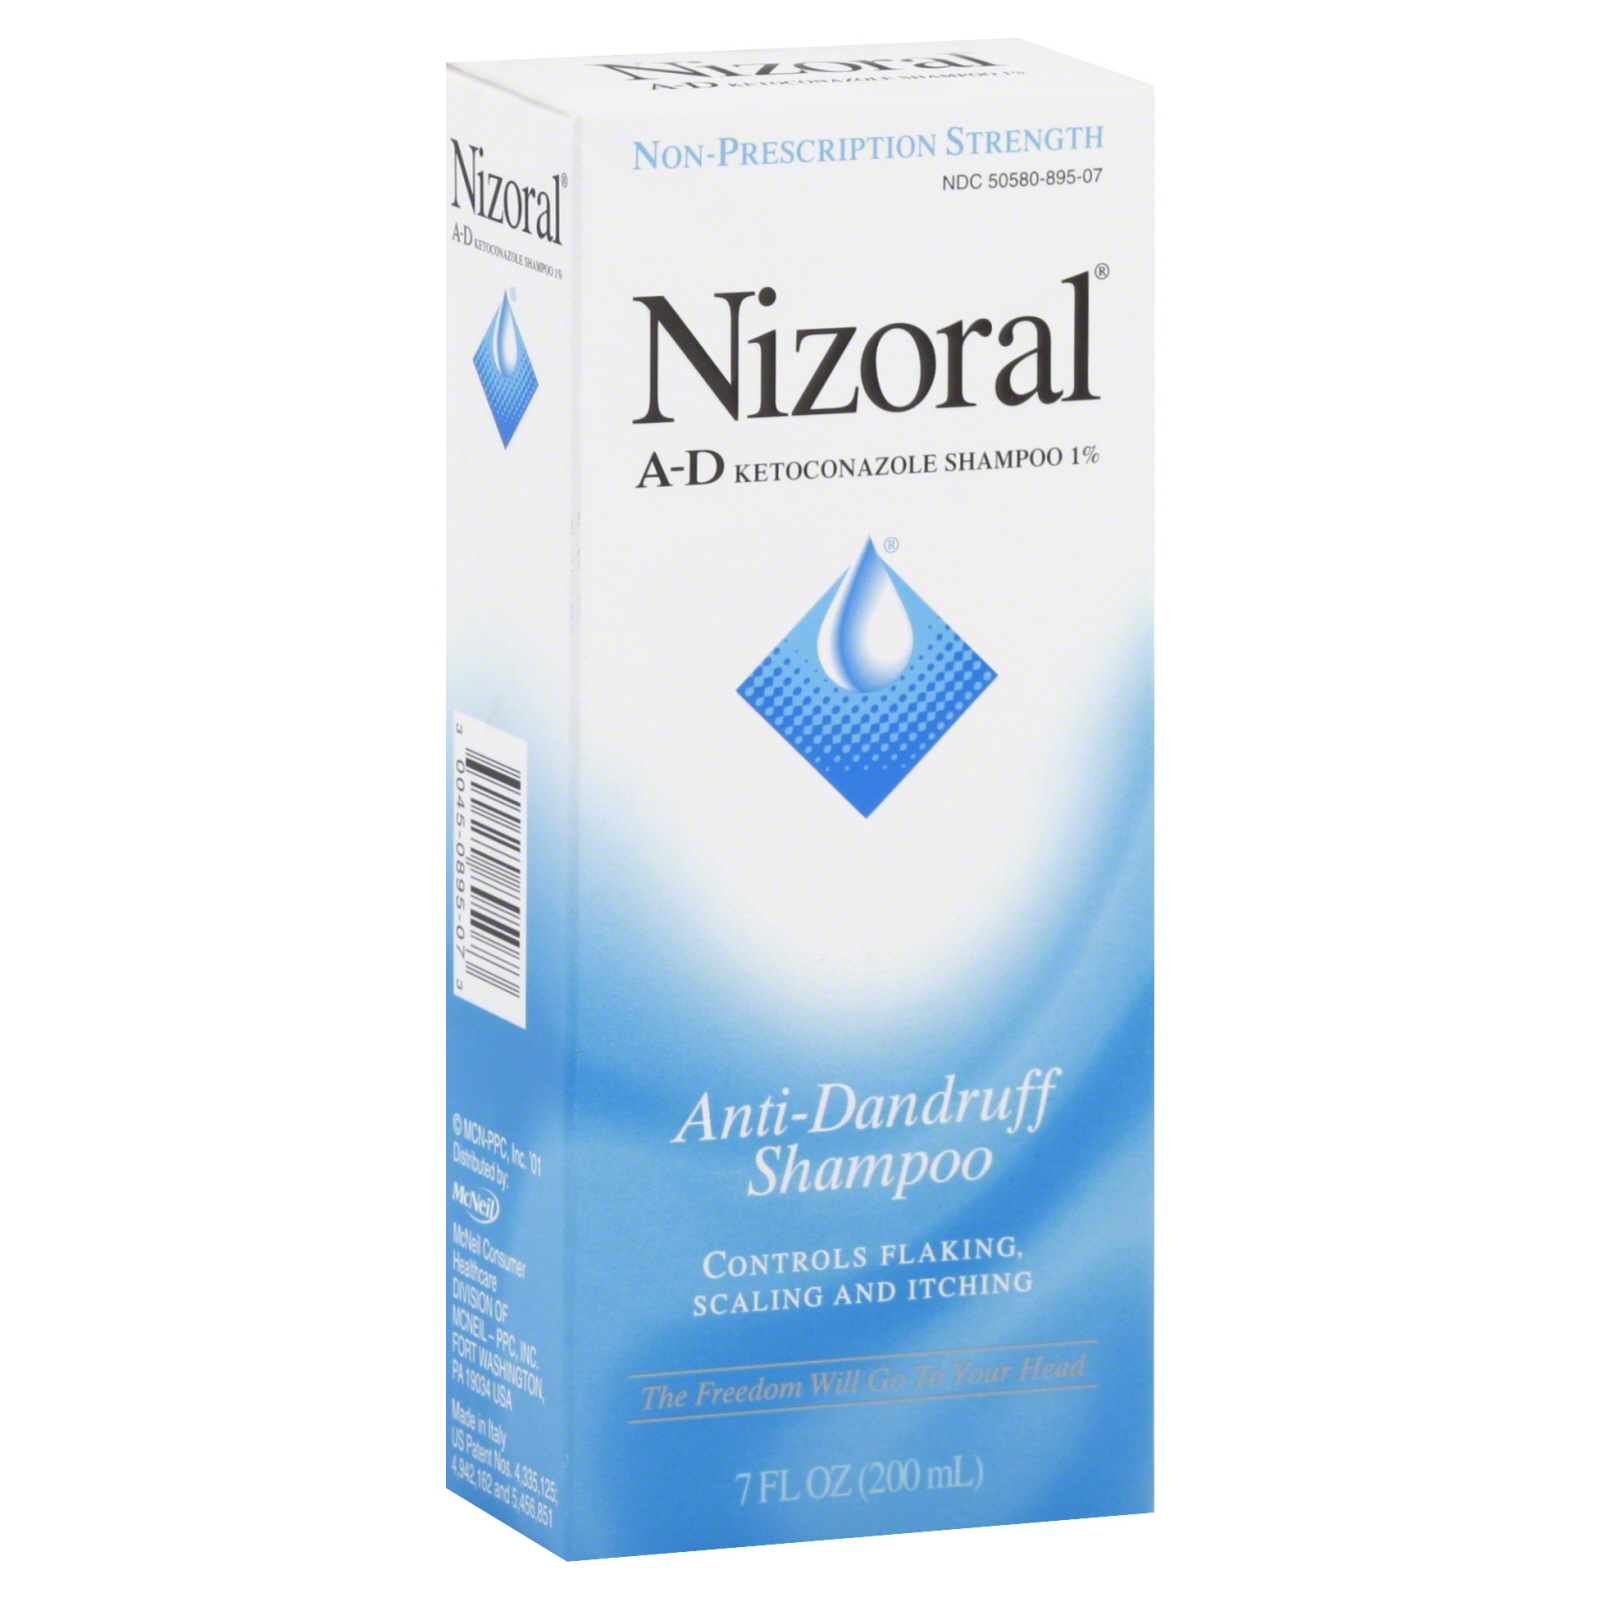 Kor ozon I Nizoral Anti-Dandruff Shampoo, 7 fl oz (200 ml)